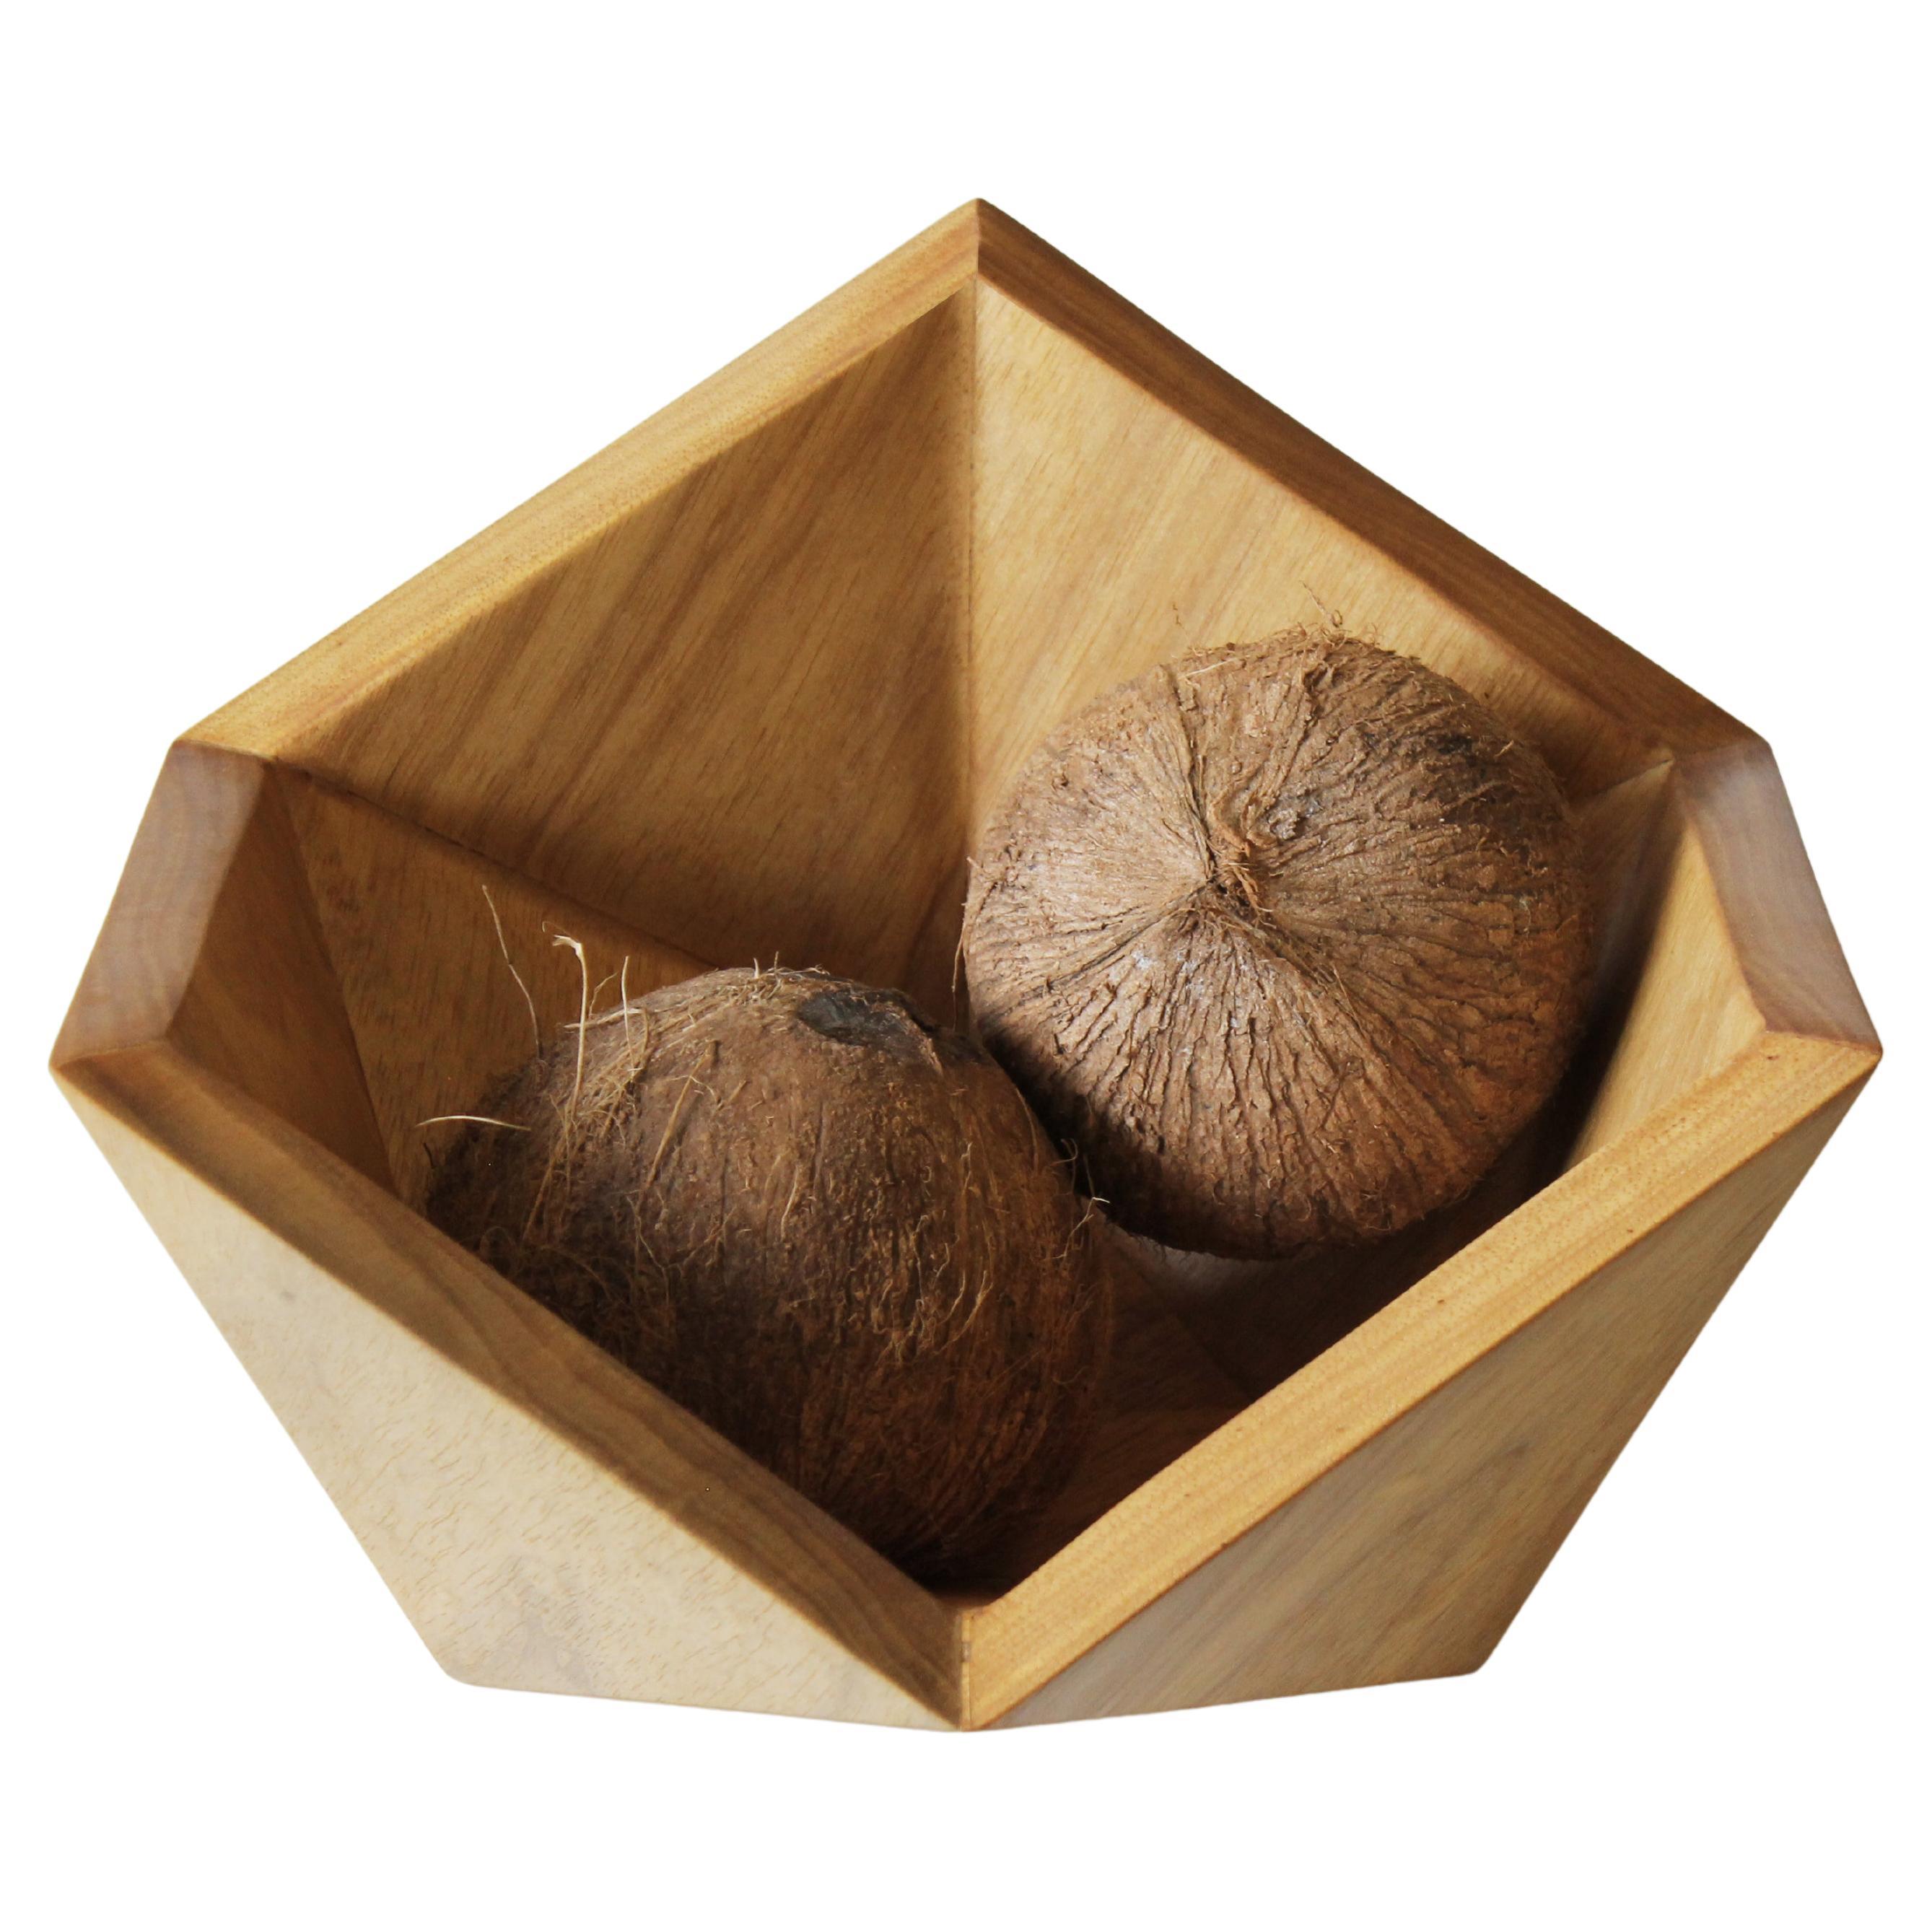 Icosa wood bowl - (tauari)